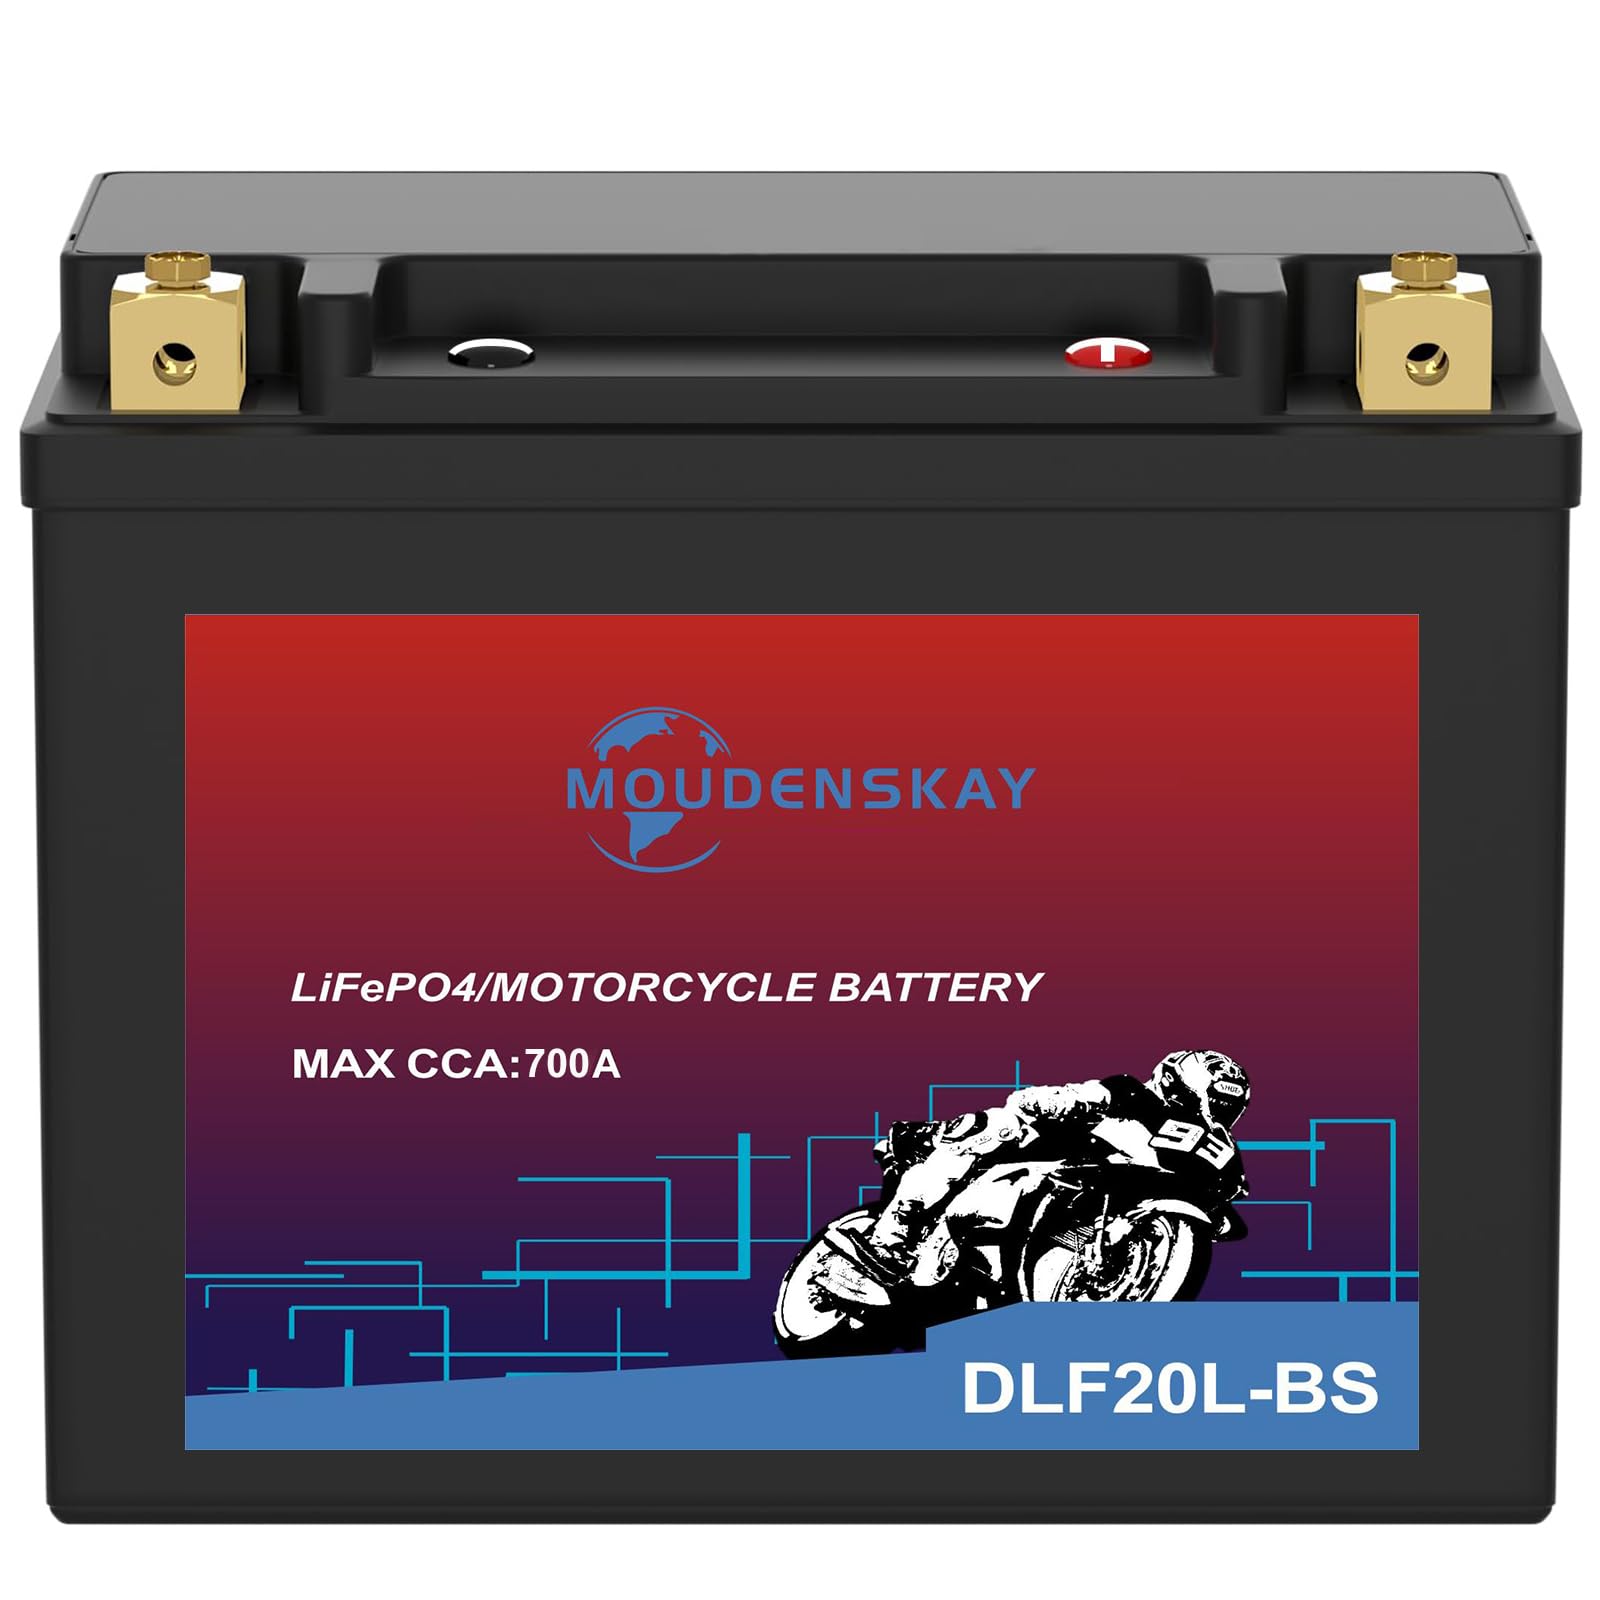 MOUDENSKAY Lithium Motorrad Batterie 12V Lithium Powersports Batterie mit BMS,YTX20L-BS 9AH 620CCA LiFePO4 Motorstart Batterie für Motorräder,ATV,UTV,Scooter,Schneemobil und mehr von MOUDENSKAY